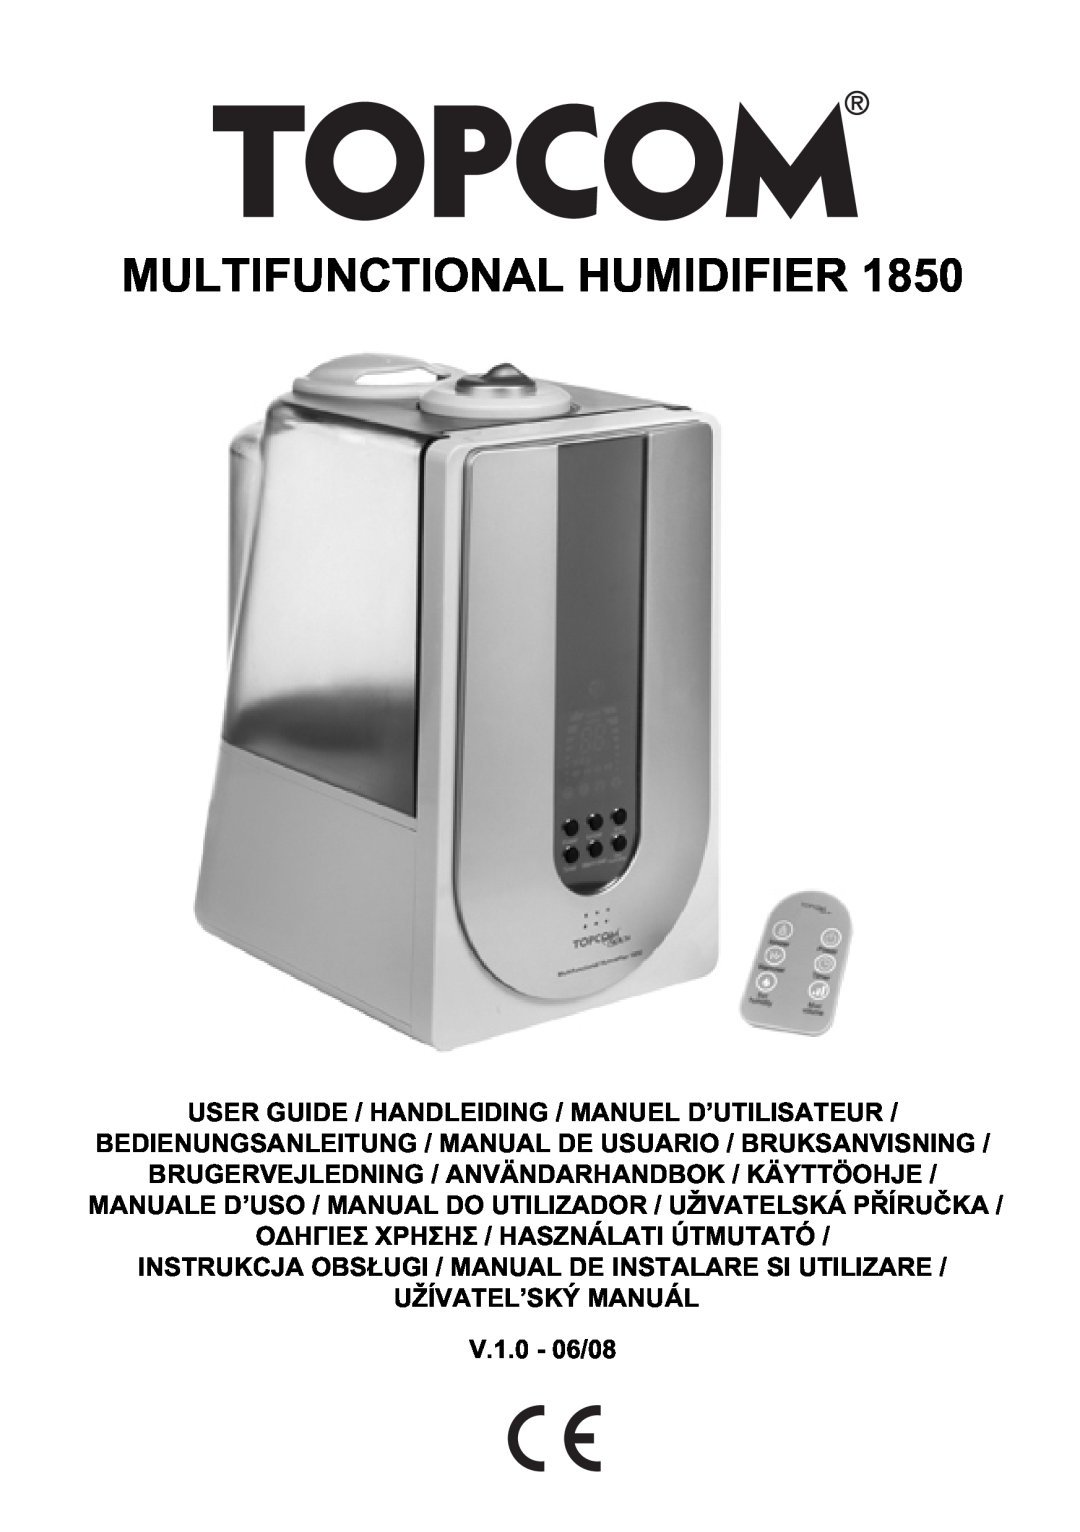 Topcom 1850 manual do utilizador Multifunctional Humidifier, User Guide / Handleiding / Manuel D’Utilisateur 